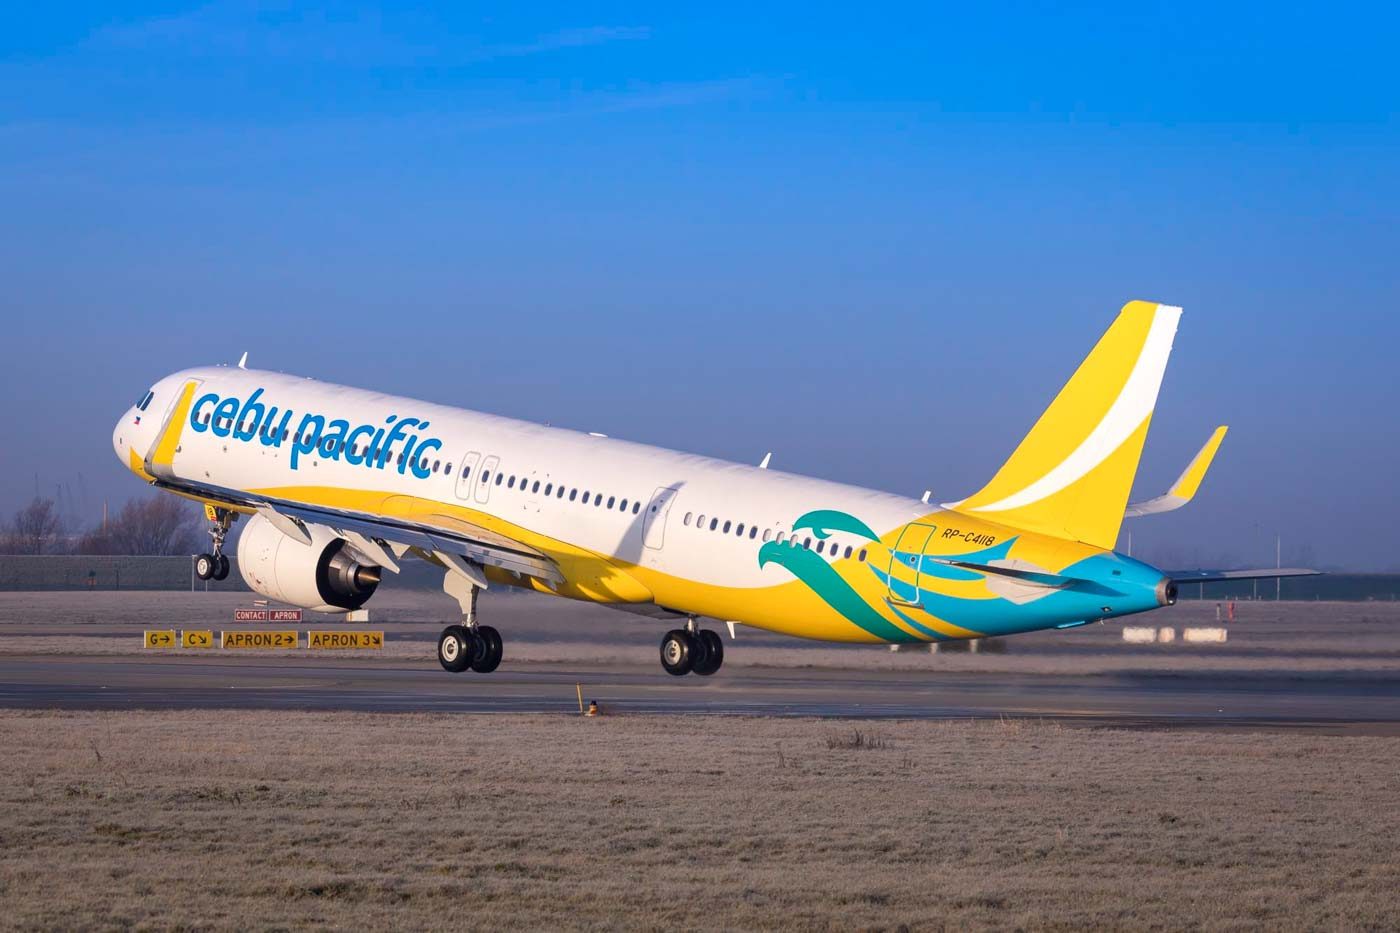 Cebu Pacific starts direct flights to Bangkok’s Don Mueang Airport on July 16